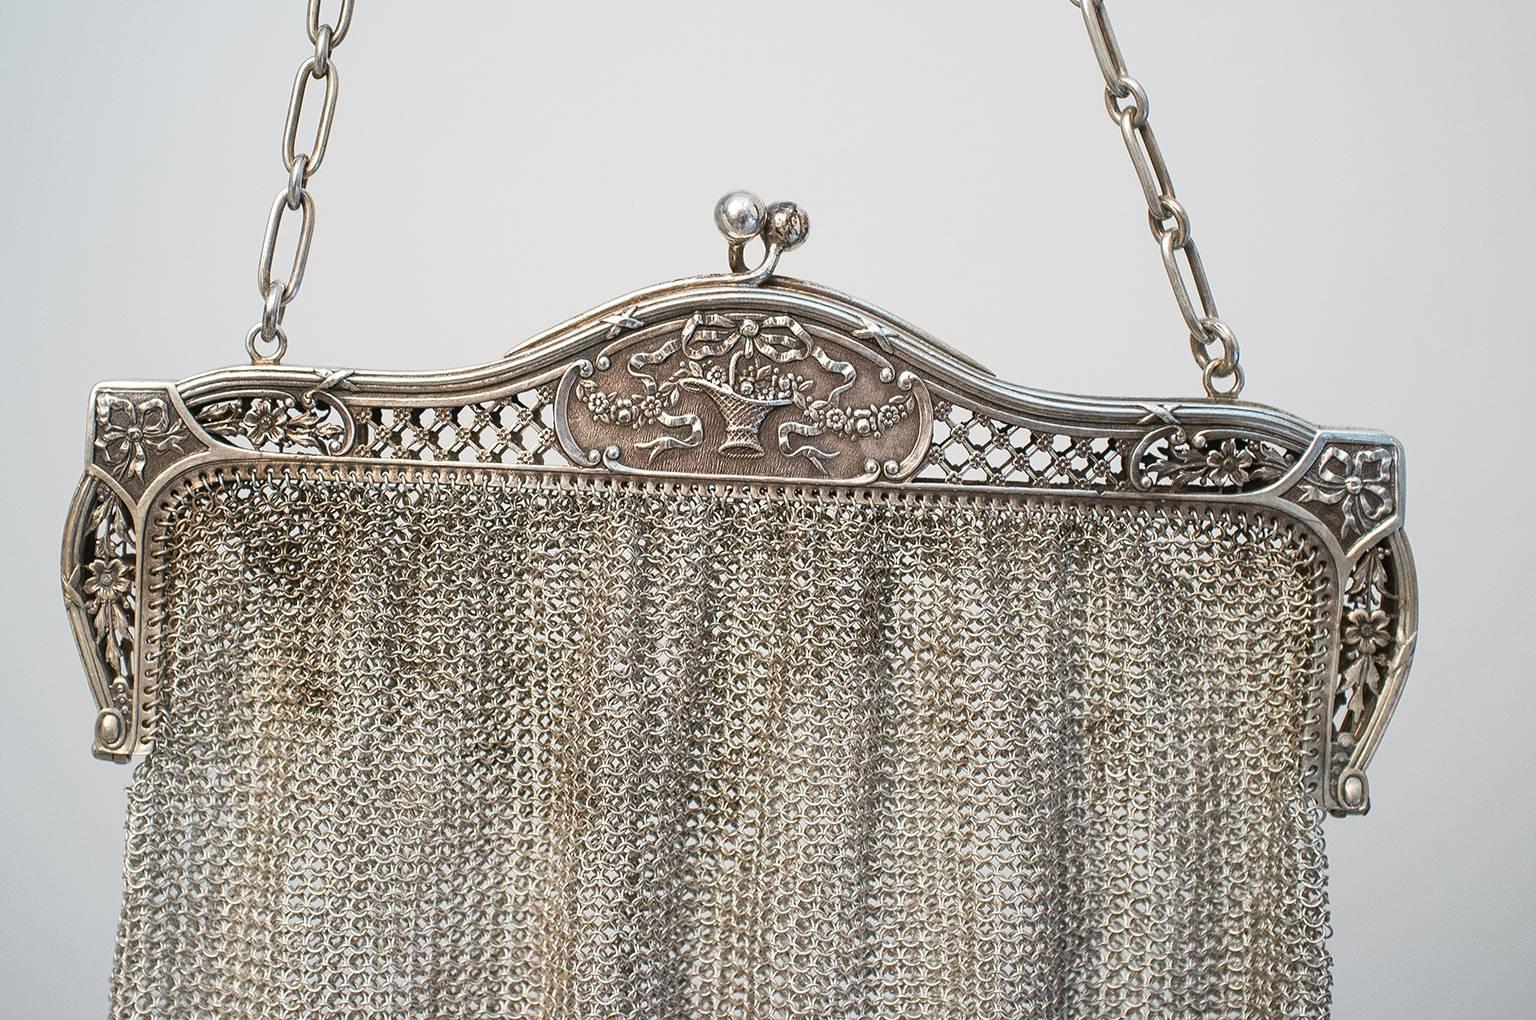  Italian Evening Silver Antique Handbag For Sale 1